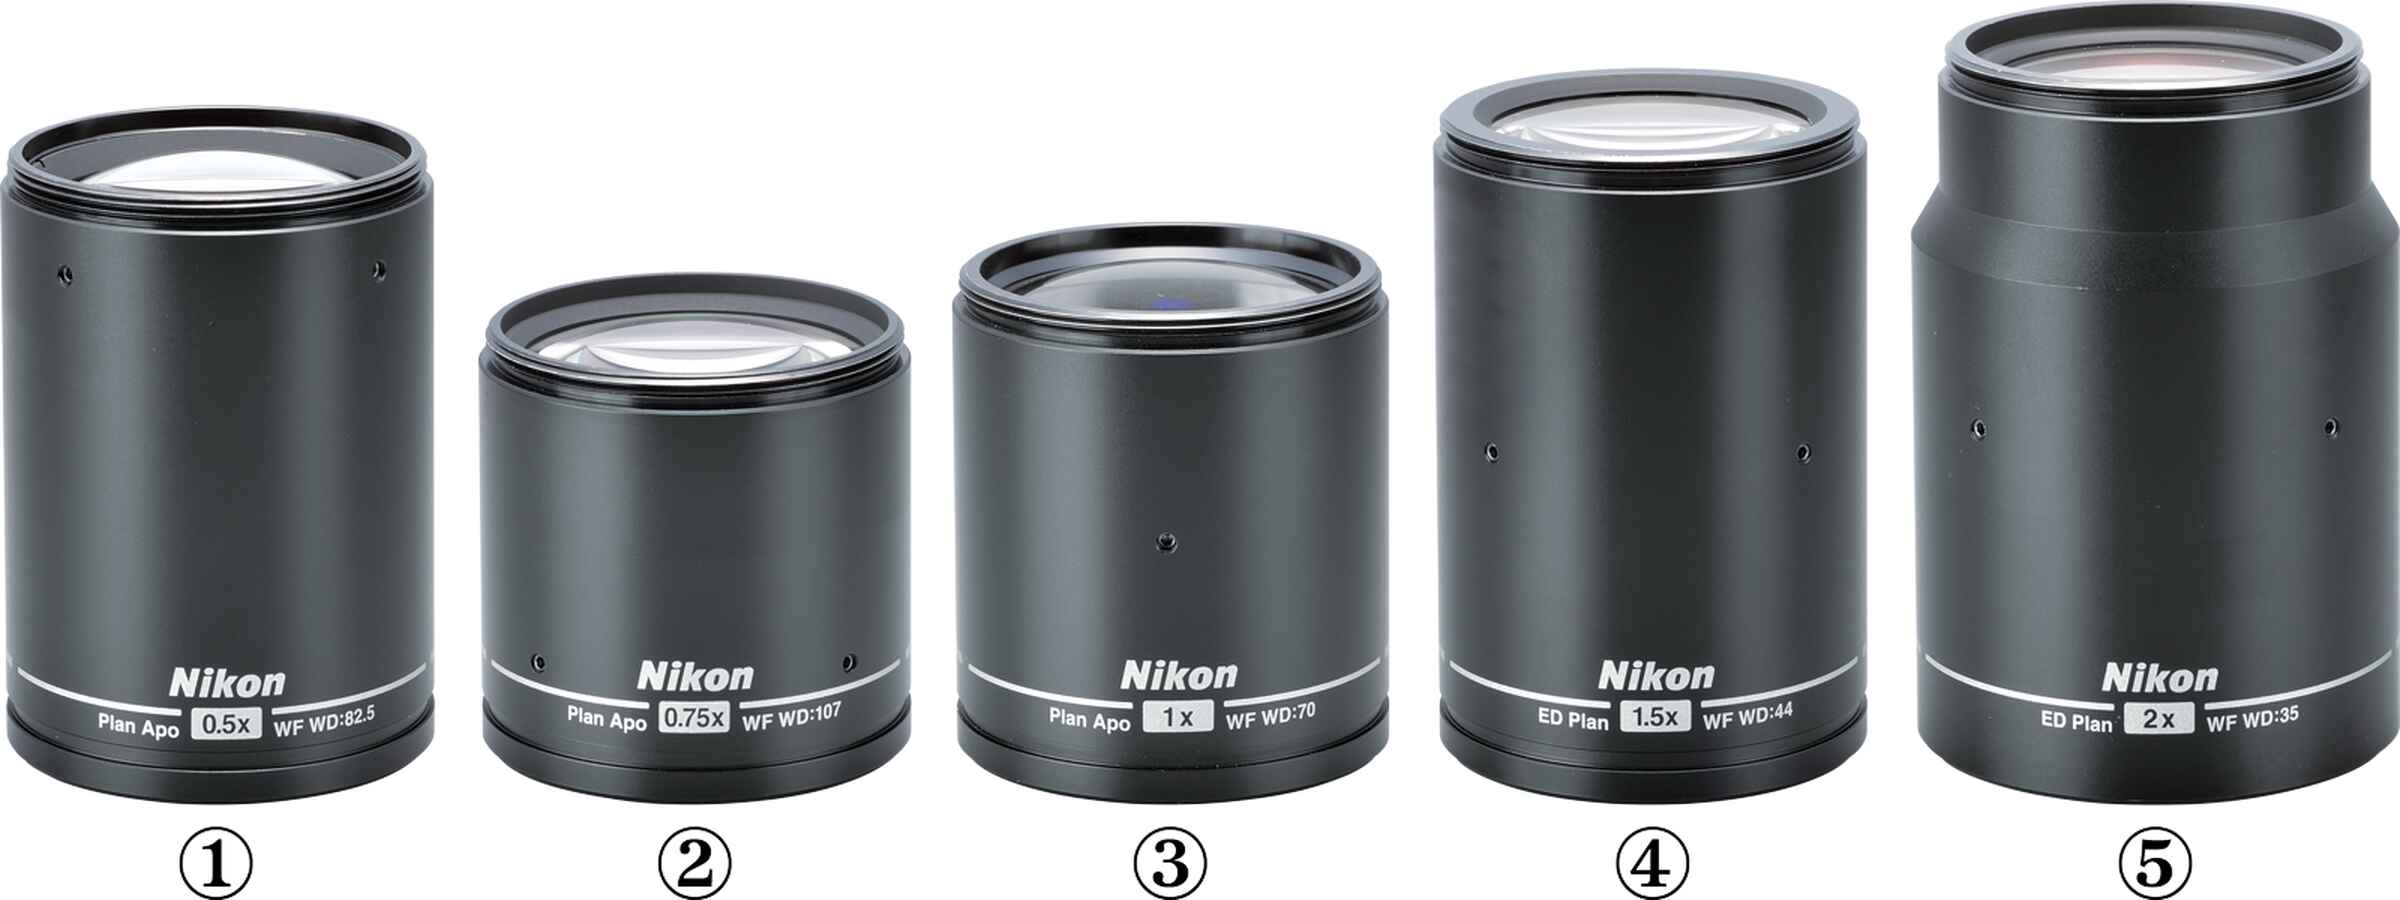 10）Nikon金属顕微鏡対物レンズMPlanApo200X